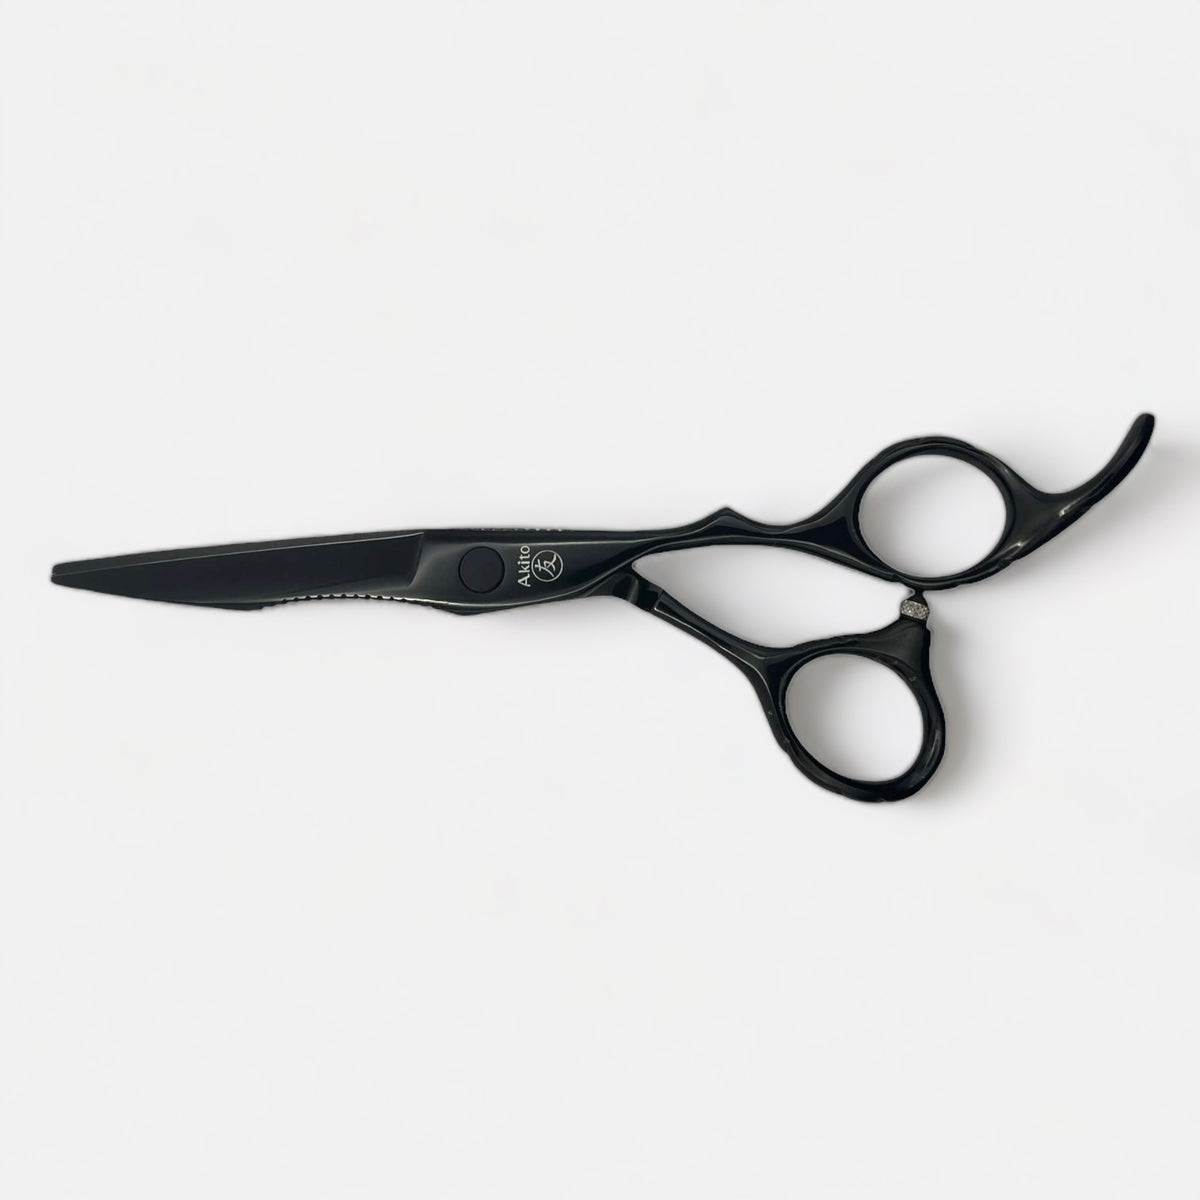 X-5 Barber Scissors black side blade